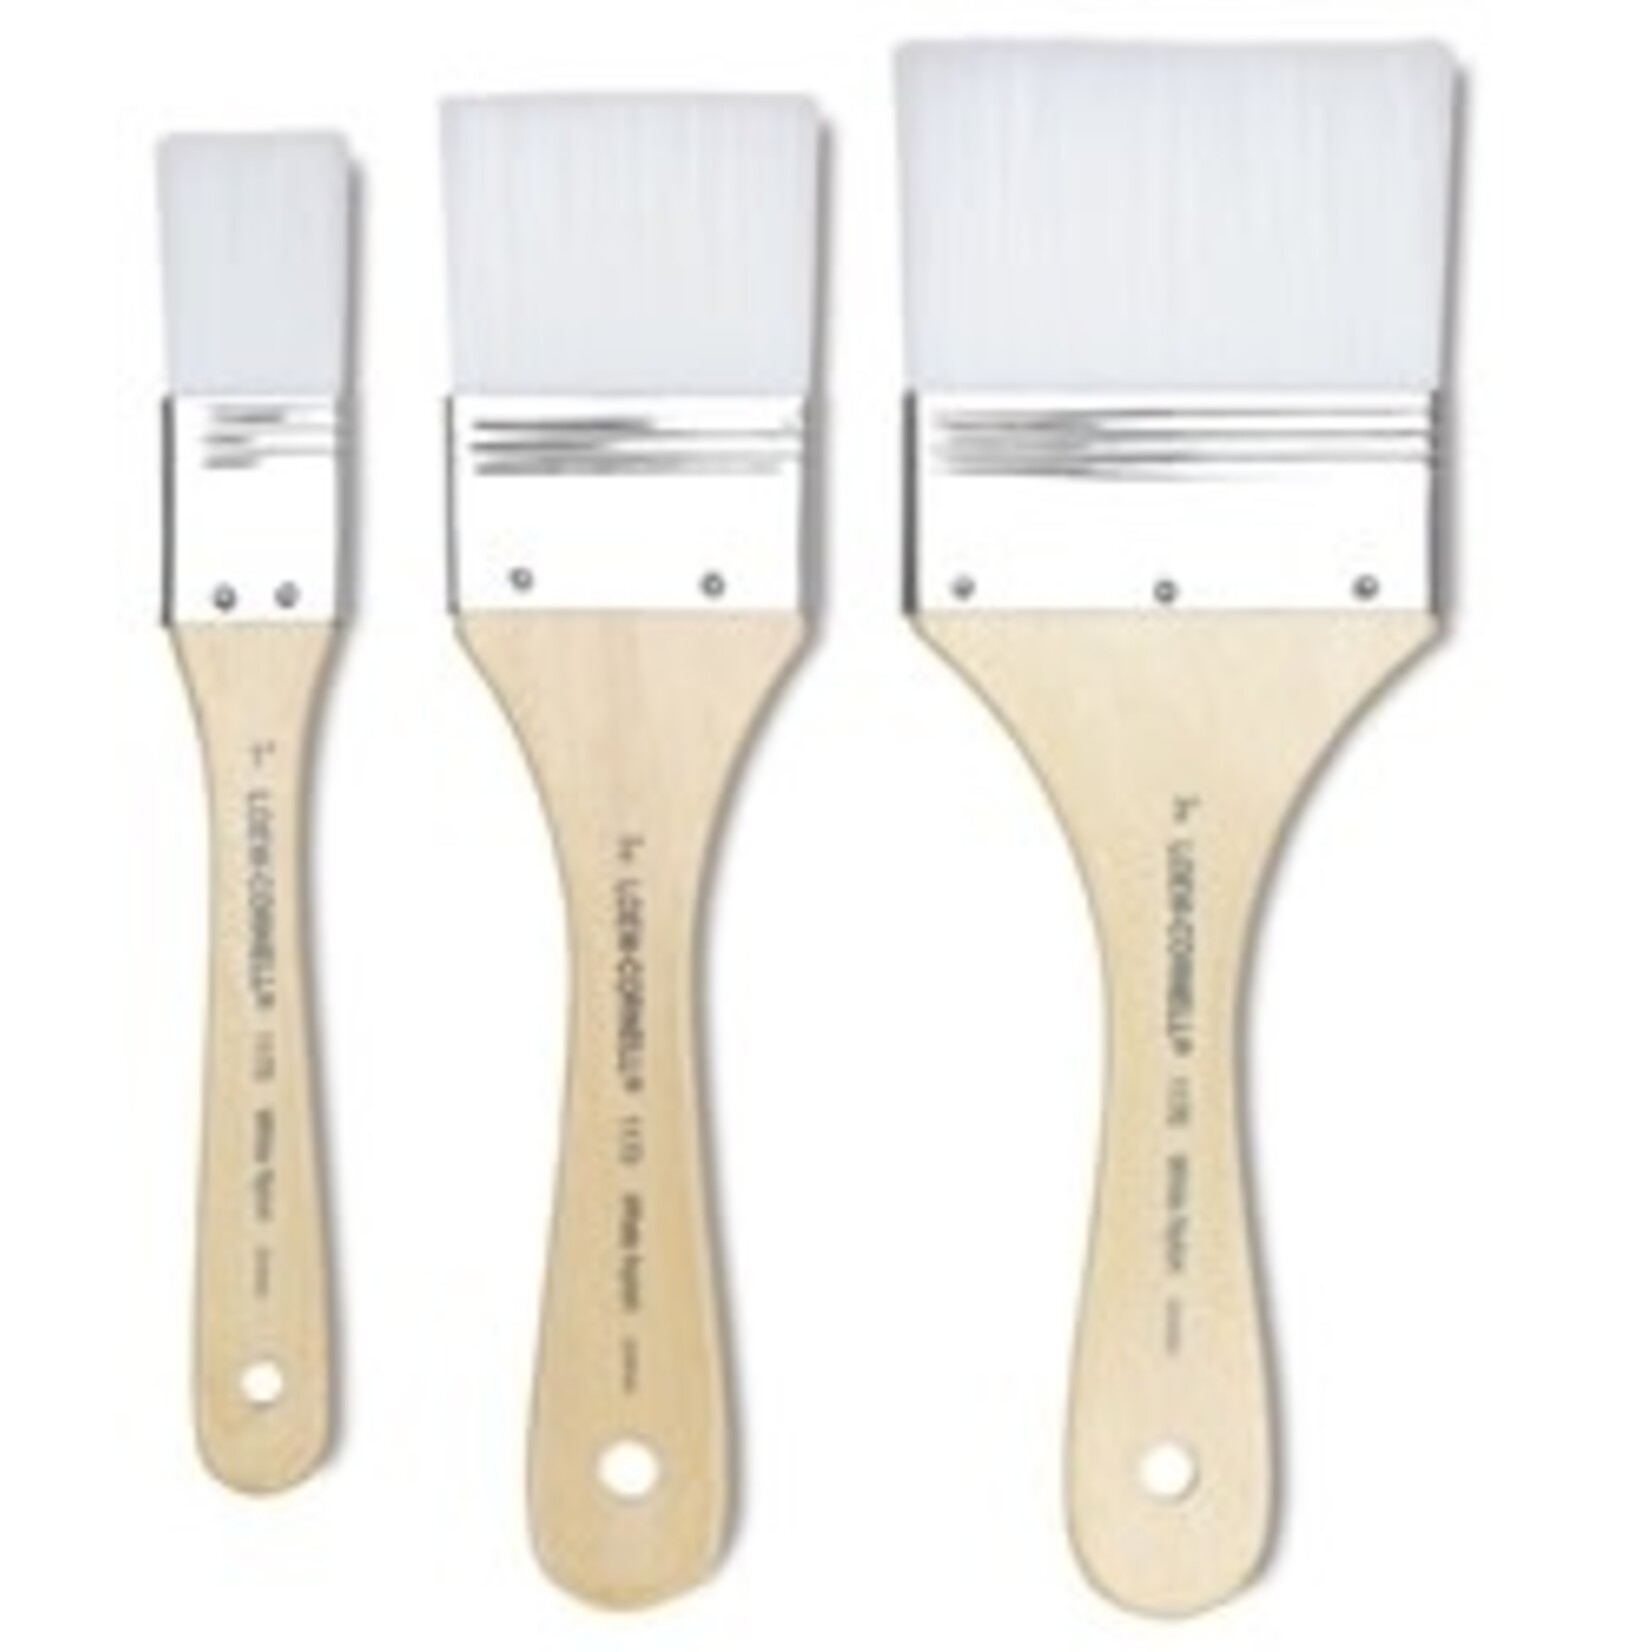 Loew-Cornell White Nylon Brush Set 3 Pc